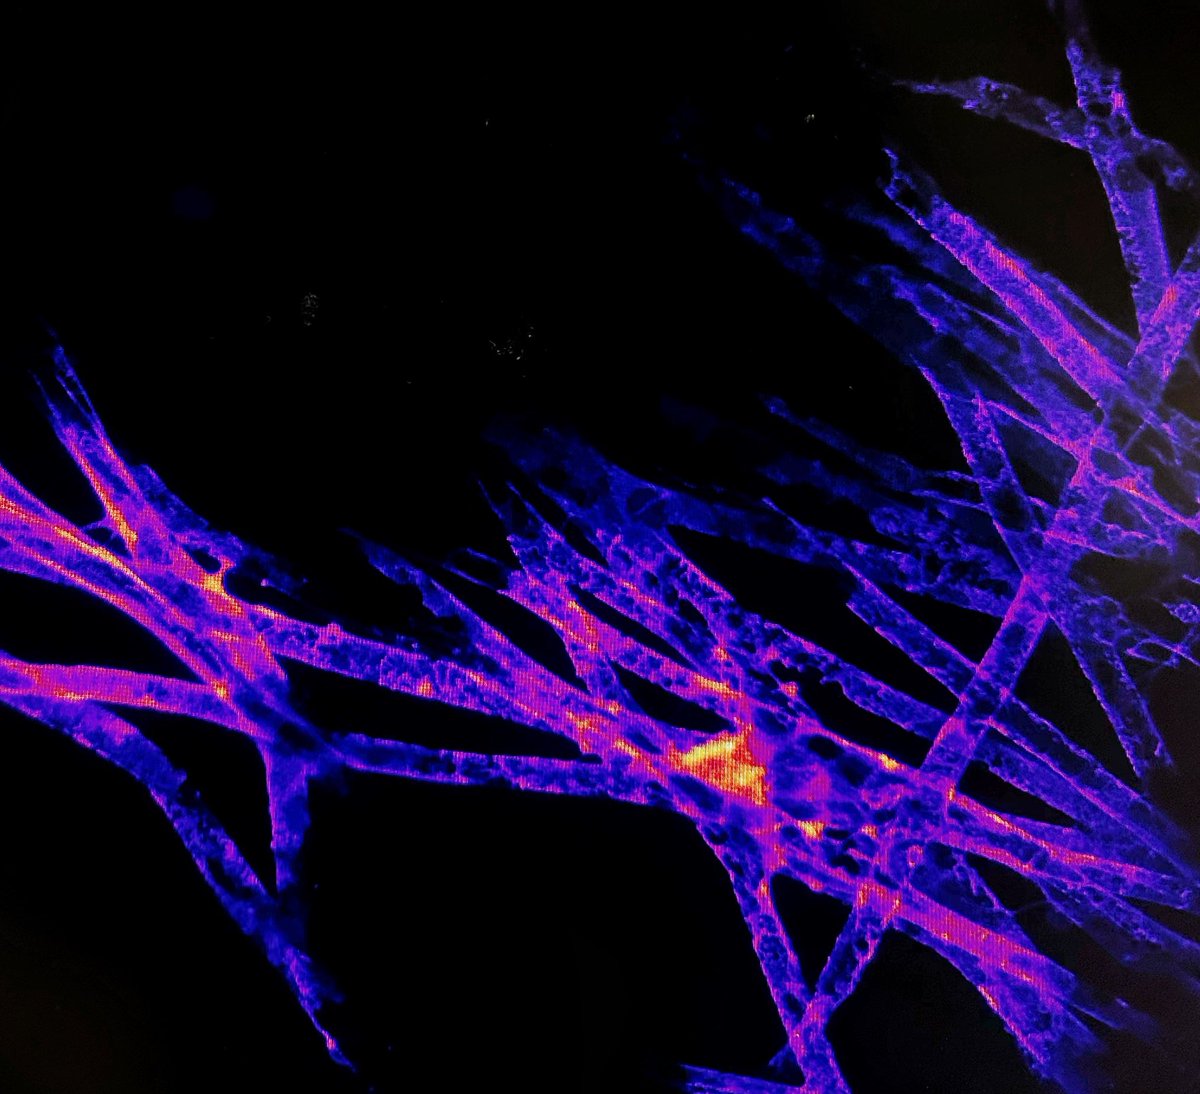 Yesterday was a good imaging day 🔬
Myelin on artificial axons (microfibers) 
#confocal #myelin #myelinworld #babysteps #microscopy #neuroscience #graduatestudent